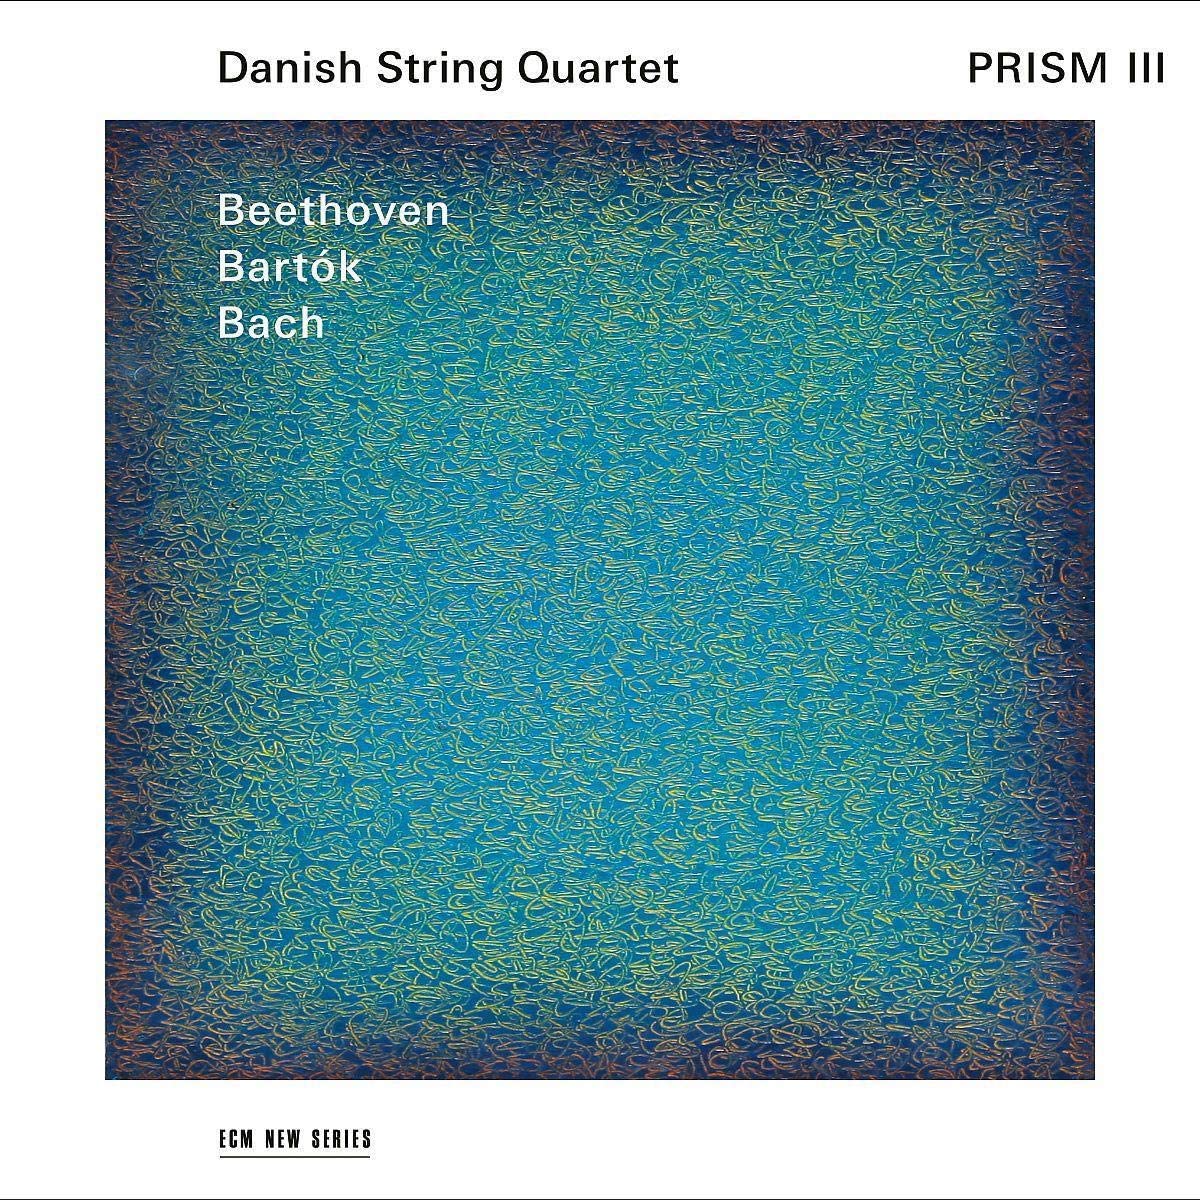 Danish String Quartet - Prism III - Beethoven, Bartok, Bach (2021) [FLAC 24bit/96kHz]